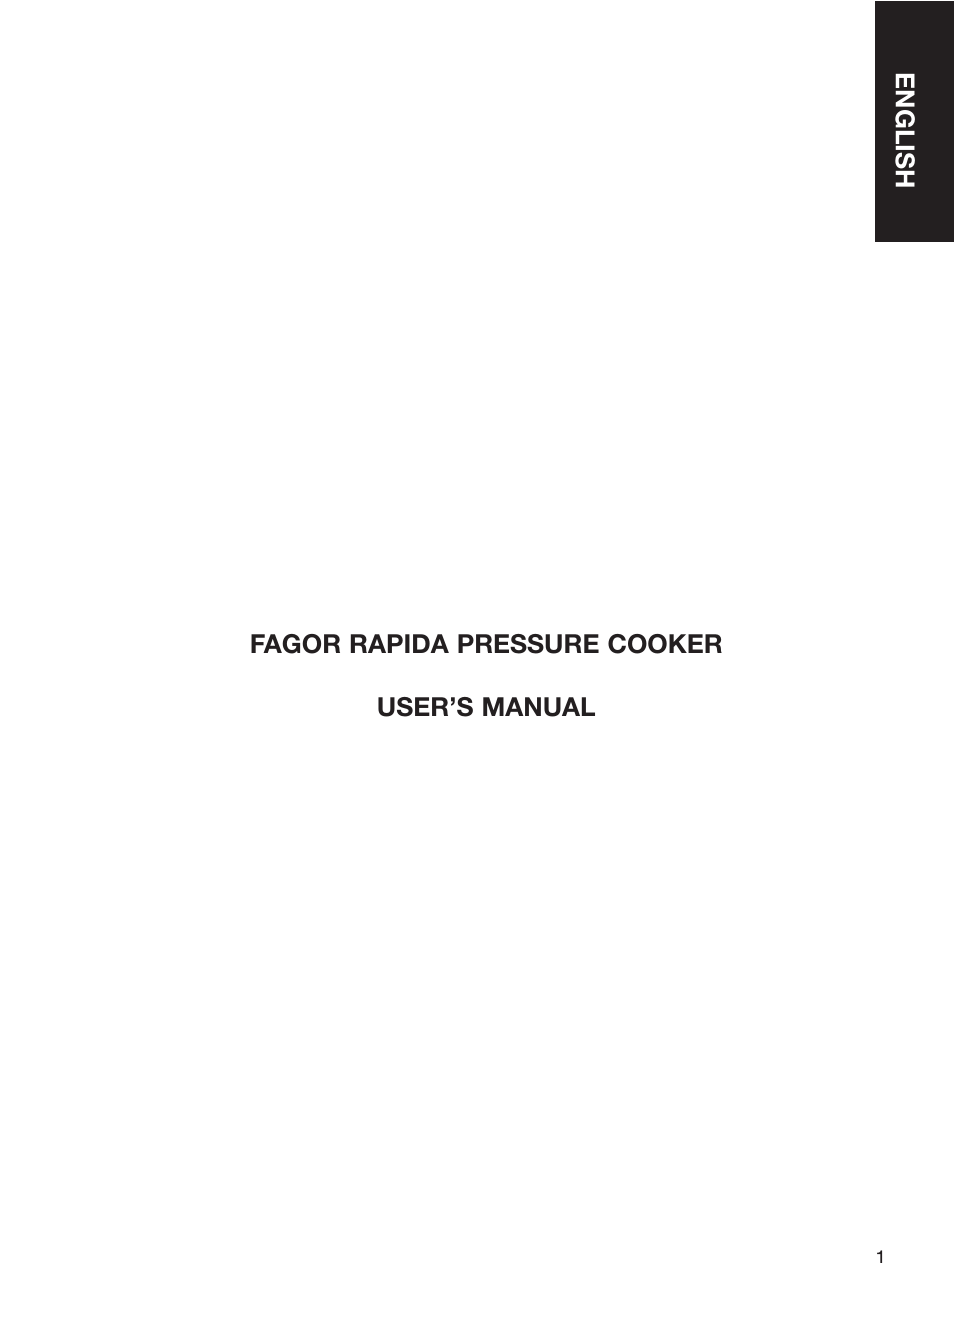 Fagor Rapida Pressure Cooker